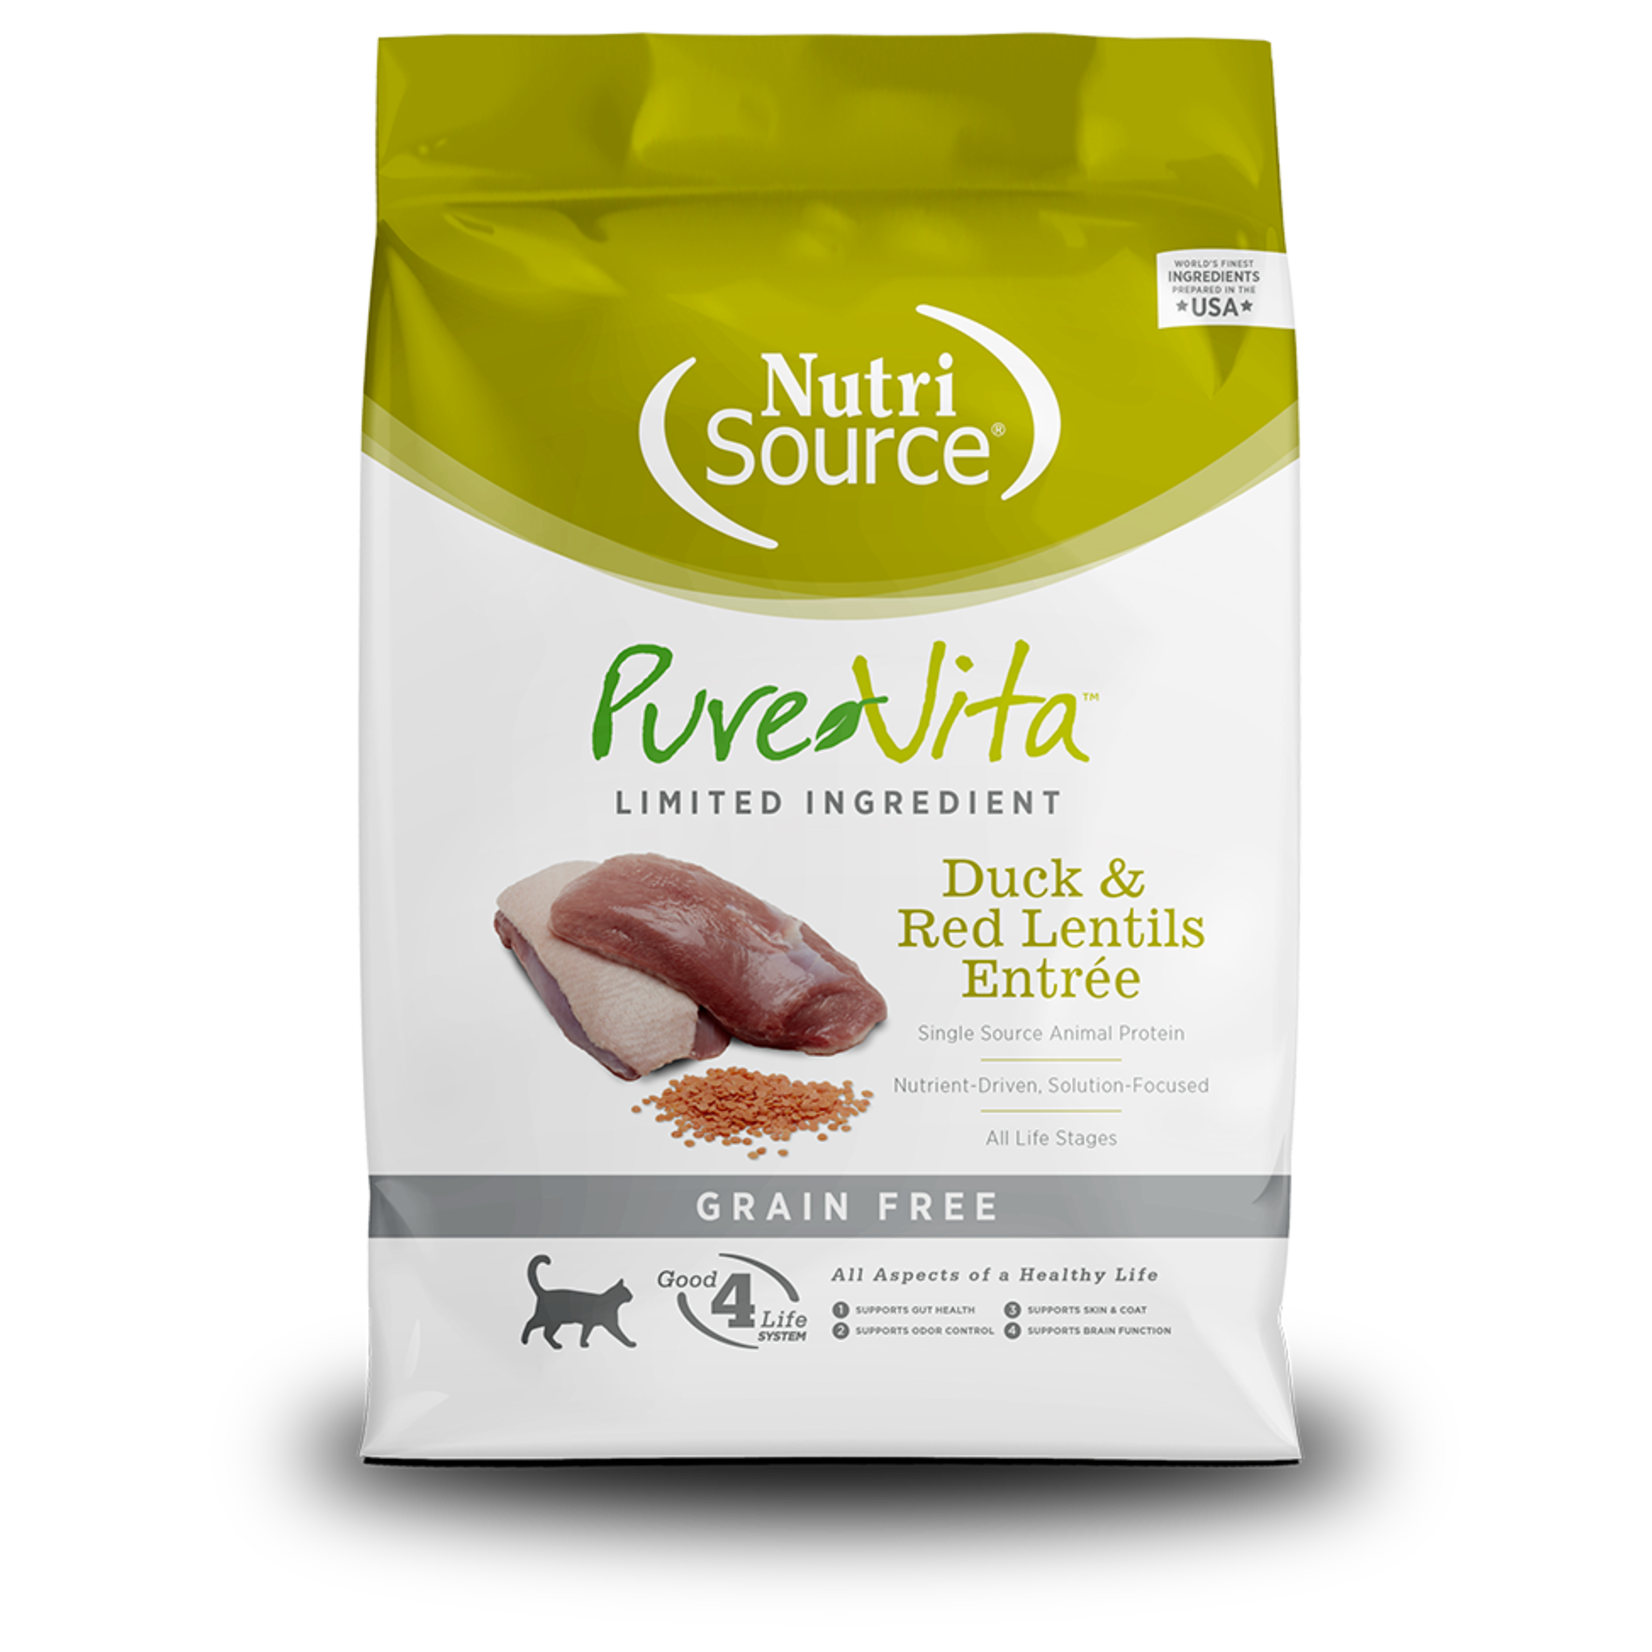 NutriSource Nutrisource Pure Vita Dry Cat Food Duck & Red Lentils Entree Limited Ingredient Grain Free